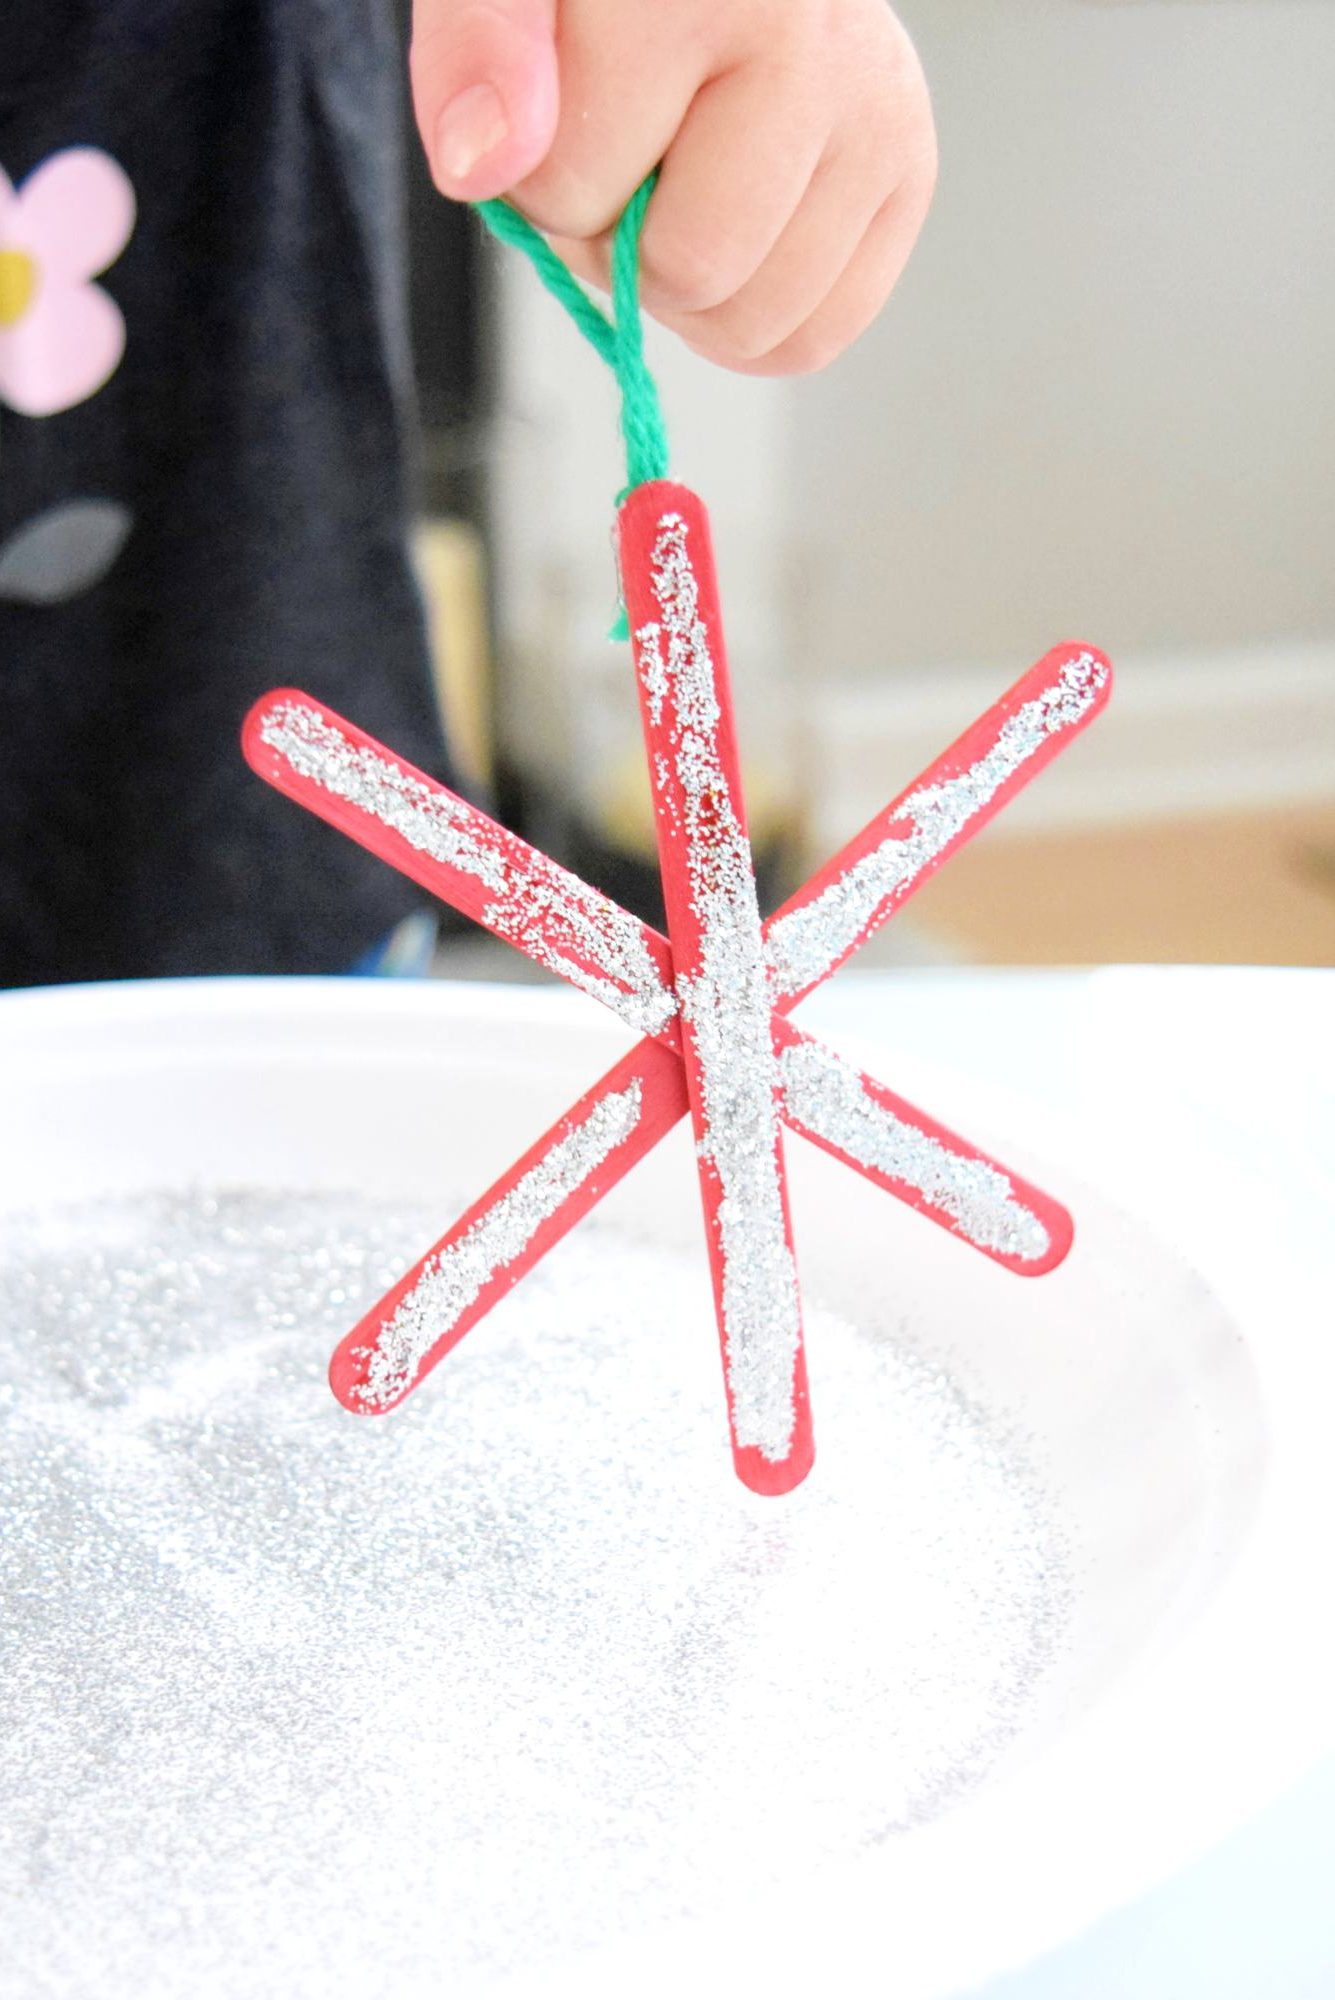 Ornament craft for kids - A girl and a glue gun